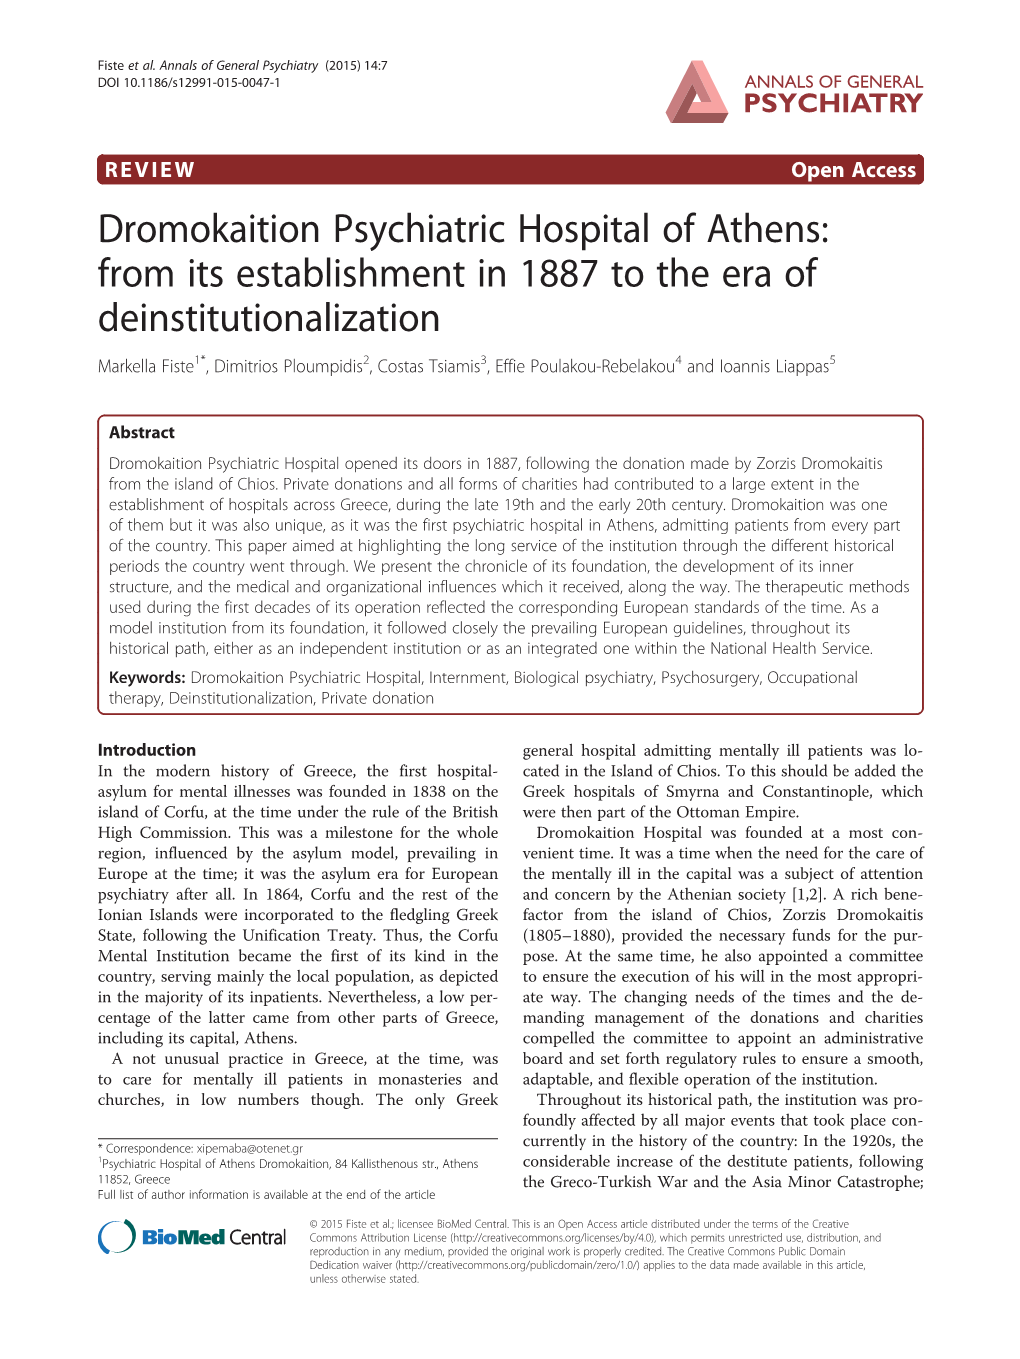 Dromokaition Psychiatric Hospital of Athens